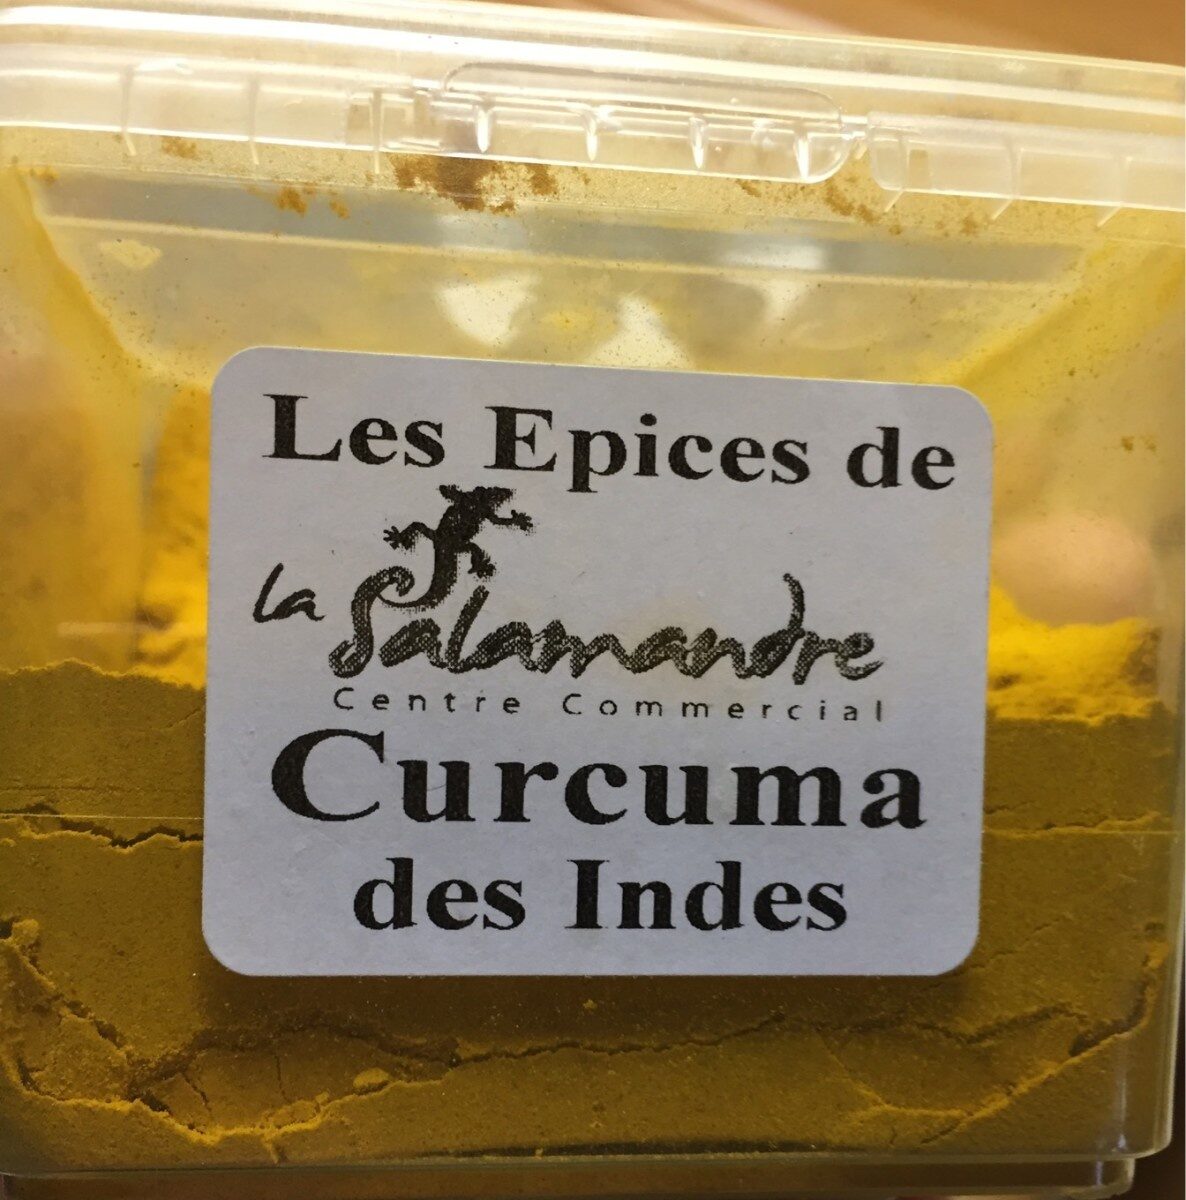 Curcuma des indes - Product - fr